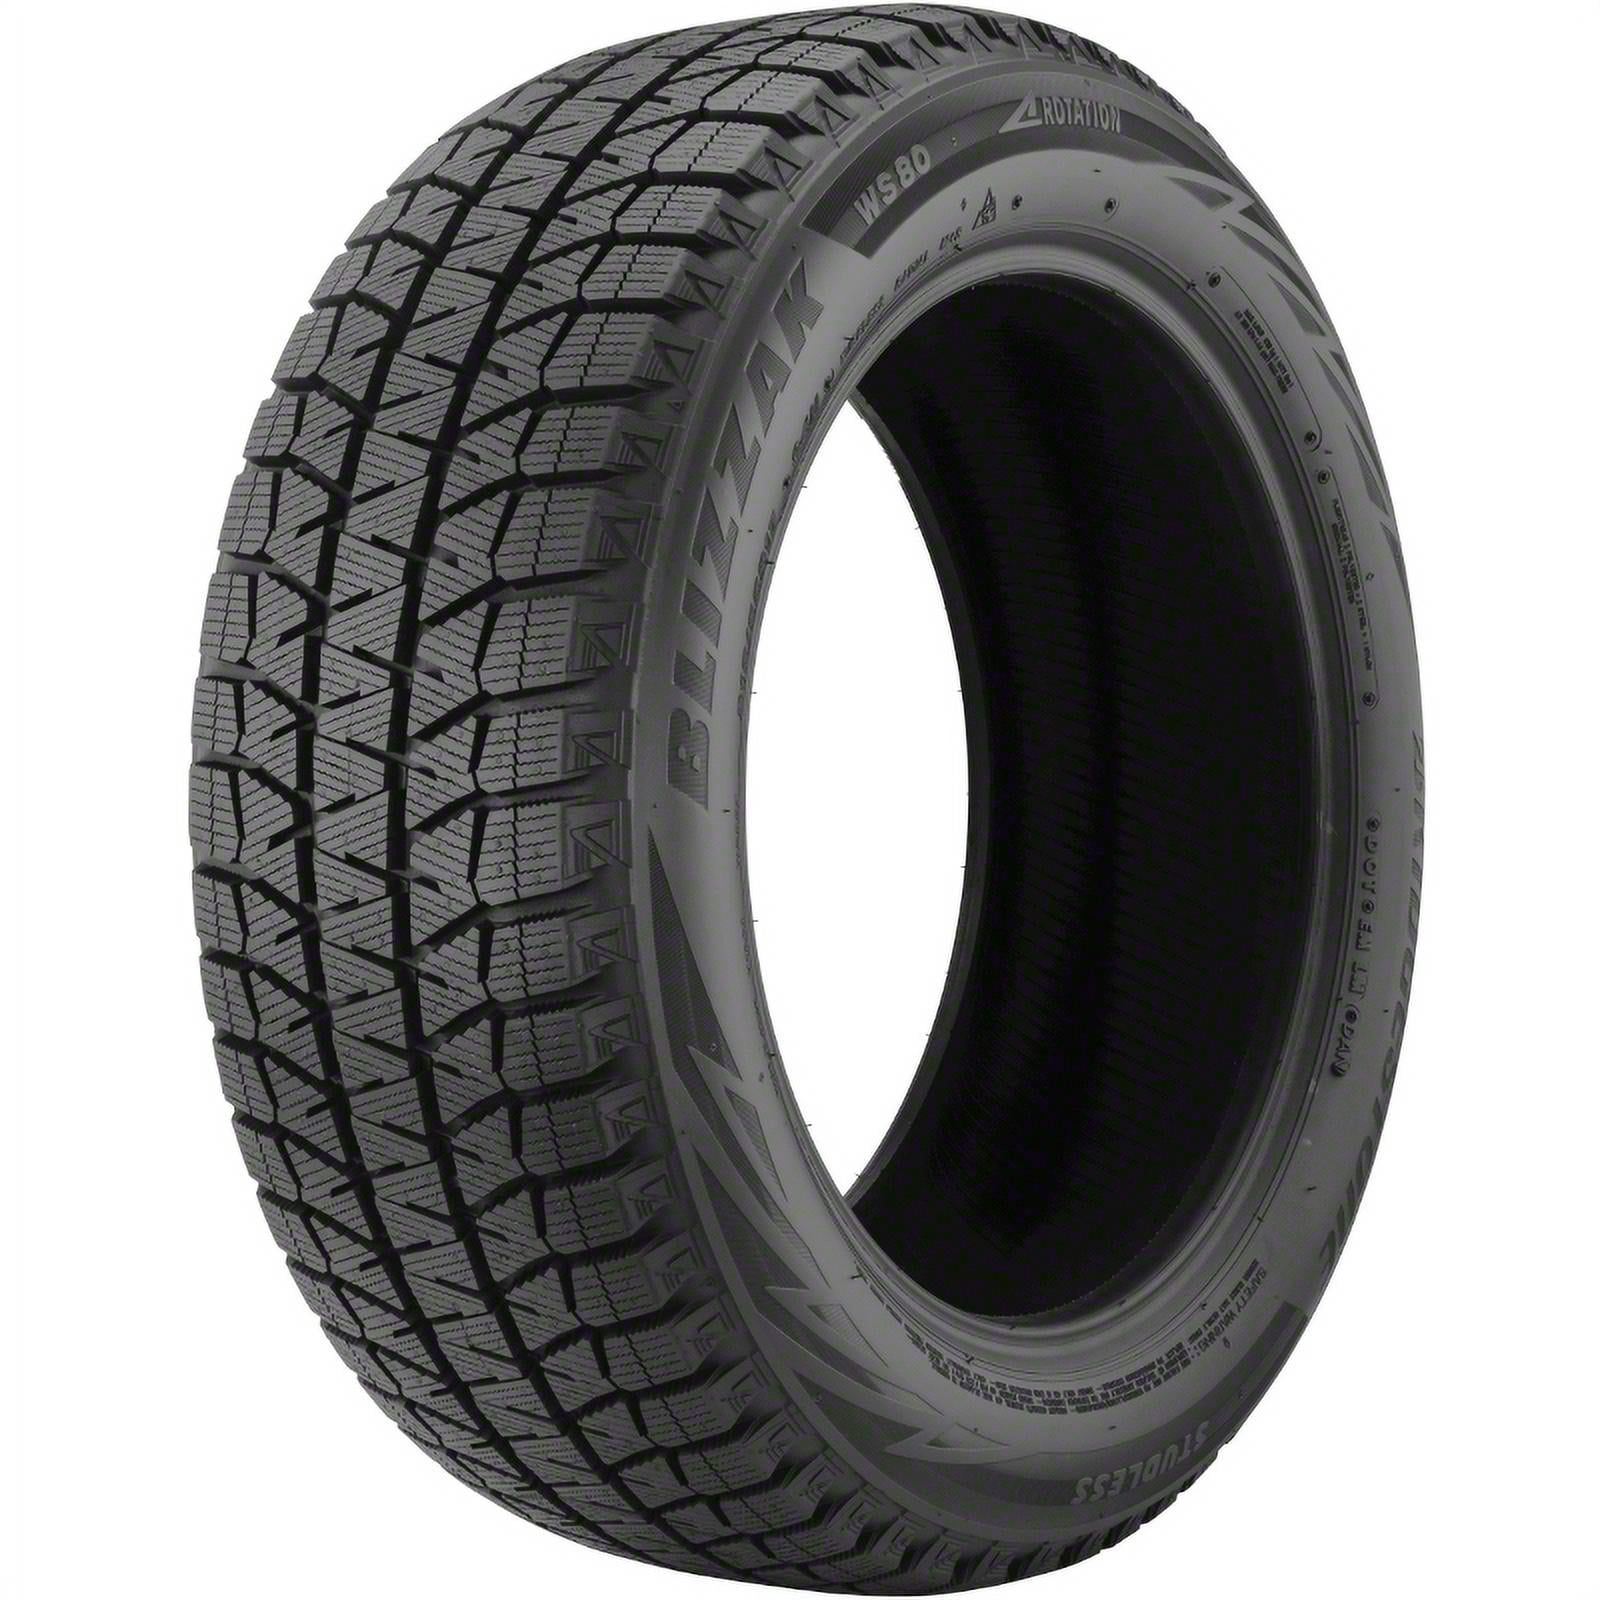 Bridgestone Blizzak WS90 Winter 245/50R18 104H Passenger Tire XL